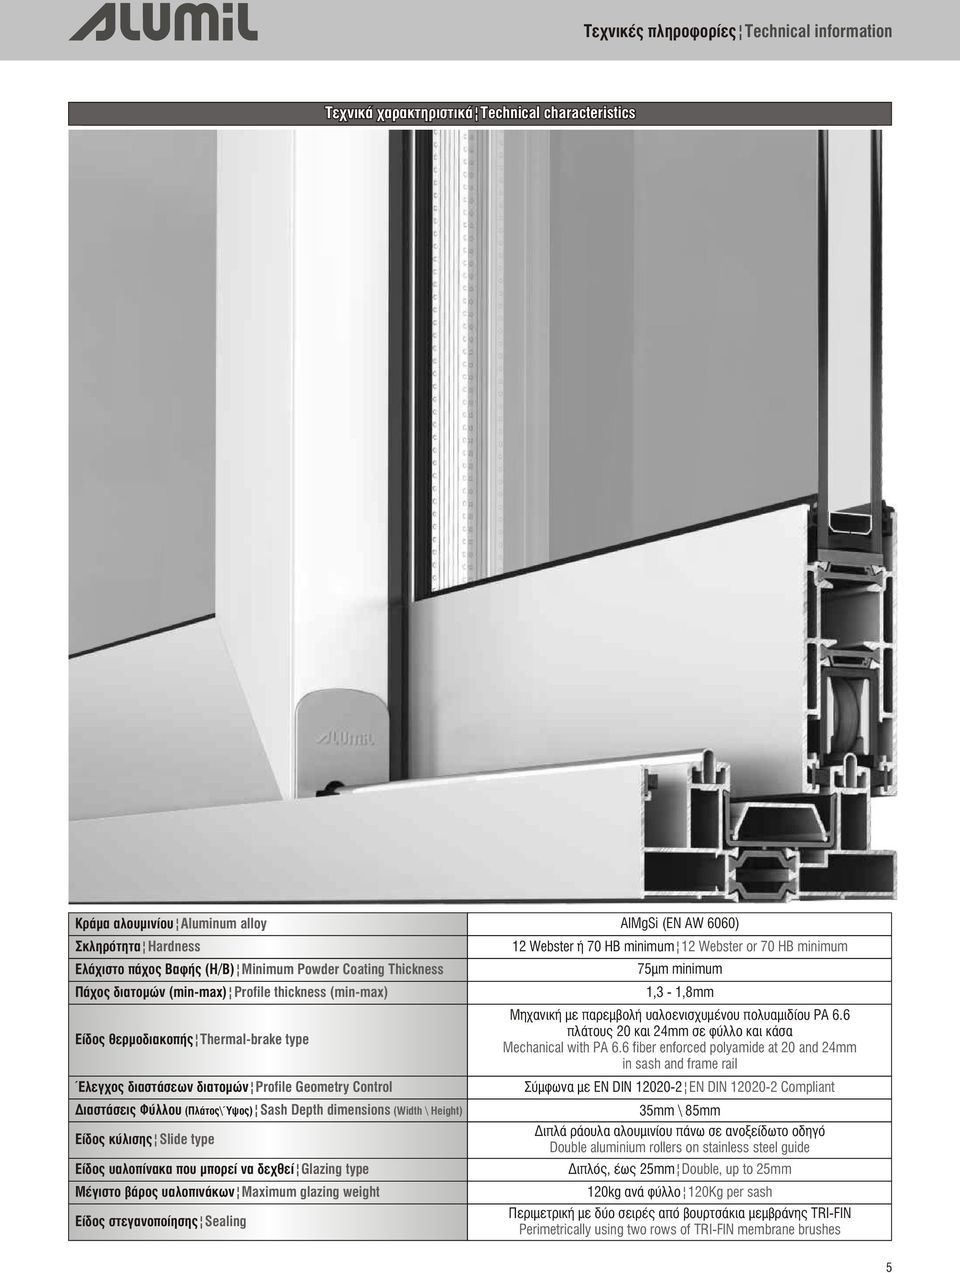 dimensions (Width \ Height) Είδος κύλισης Slide type Είδος υαλοπίνακα που μπορεί να δεχθεί Glazing type Μέγιστο βάρος υαλοπινάκων Maximum glazing weight Είδος στεγανοποίησης Sealing AlMgSi (EN AW